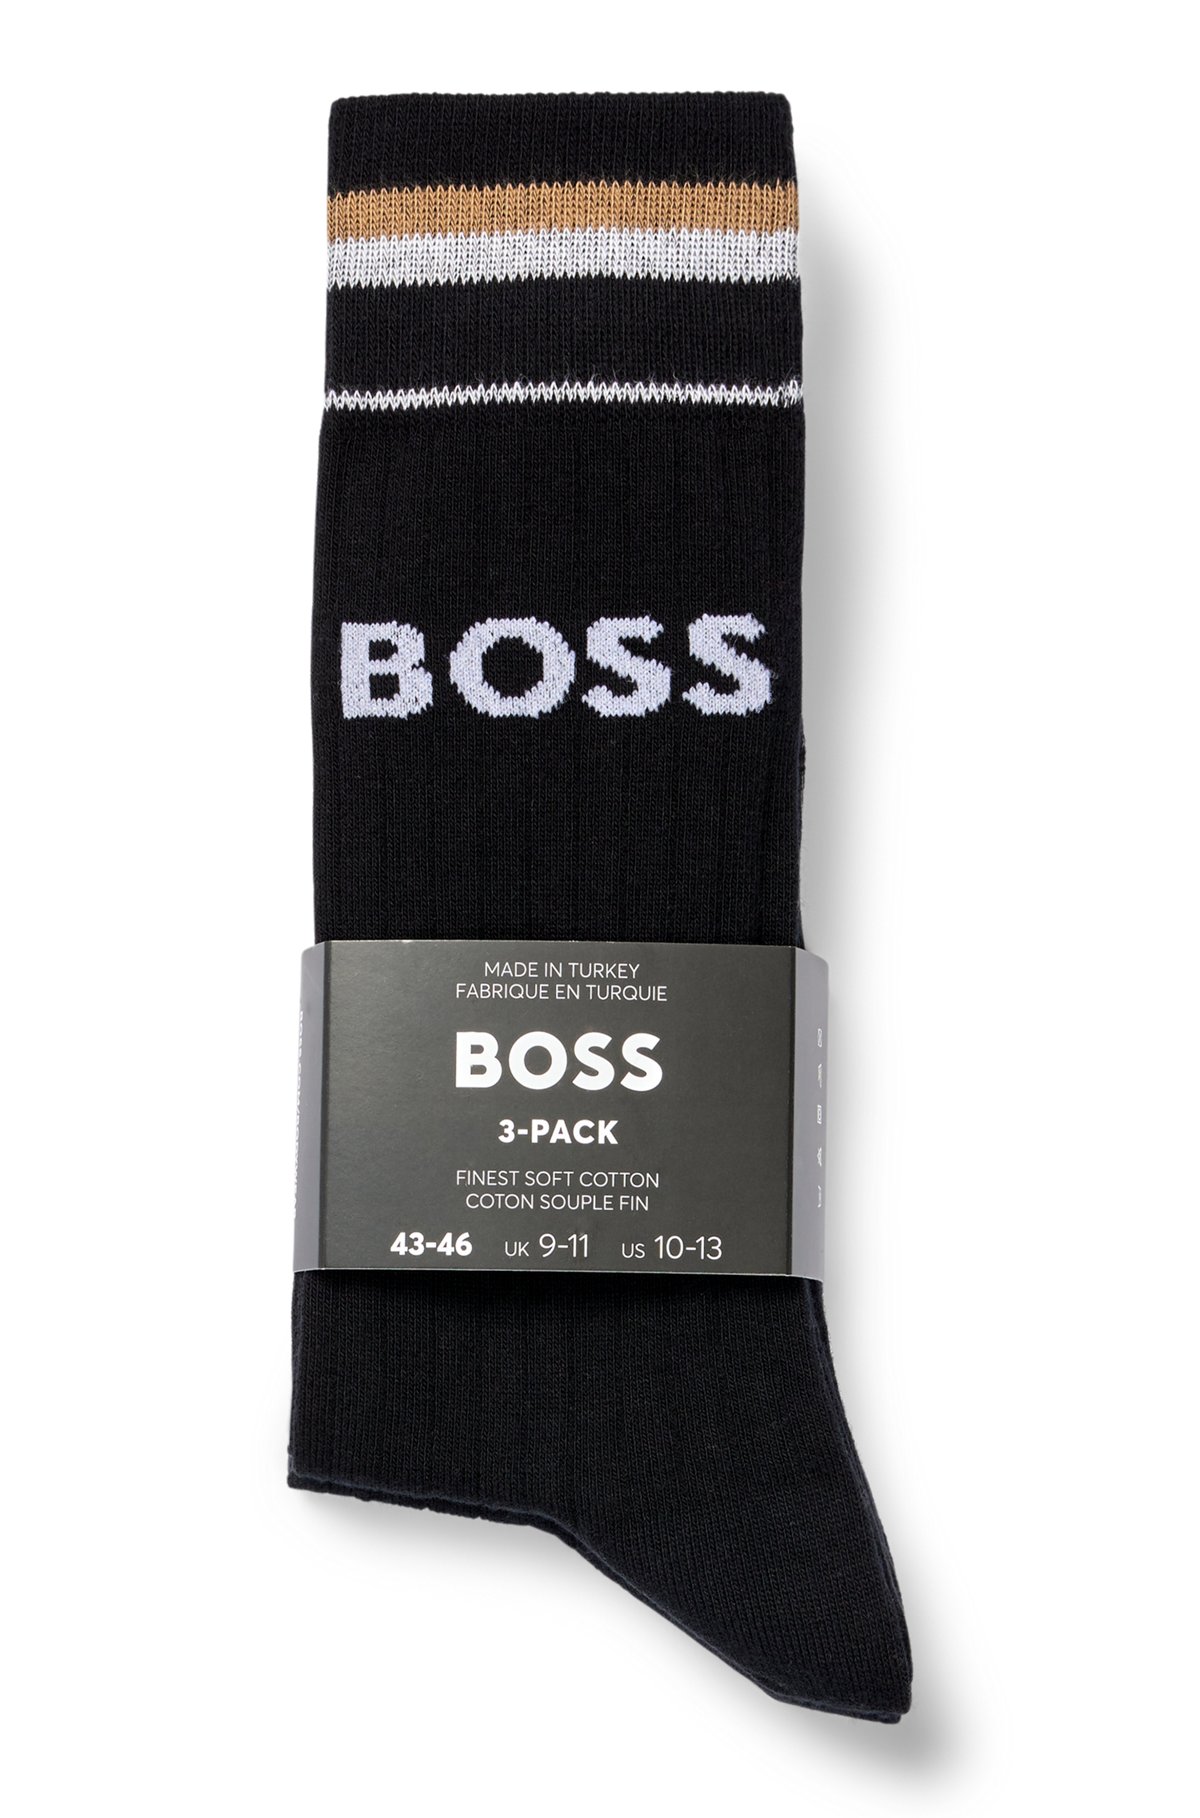 BOSS - Three-pack of regular-length socks with signature stripes